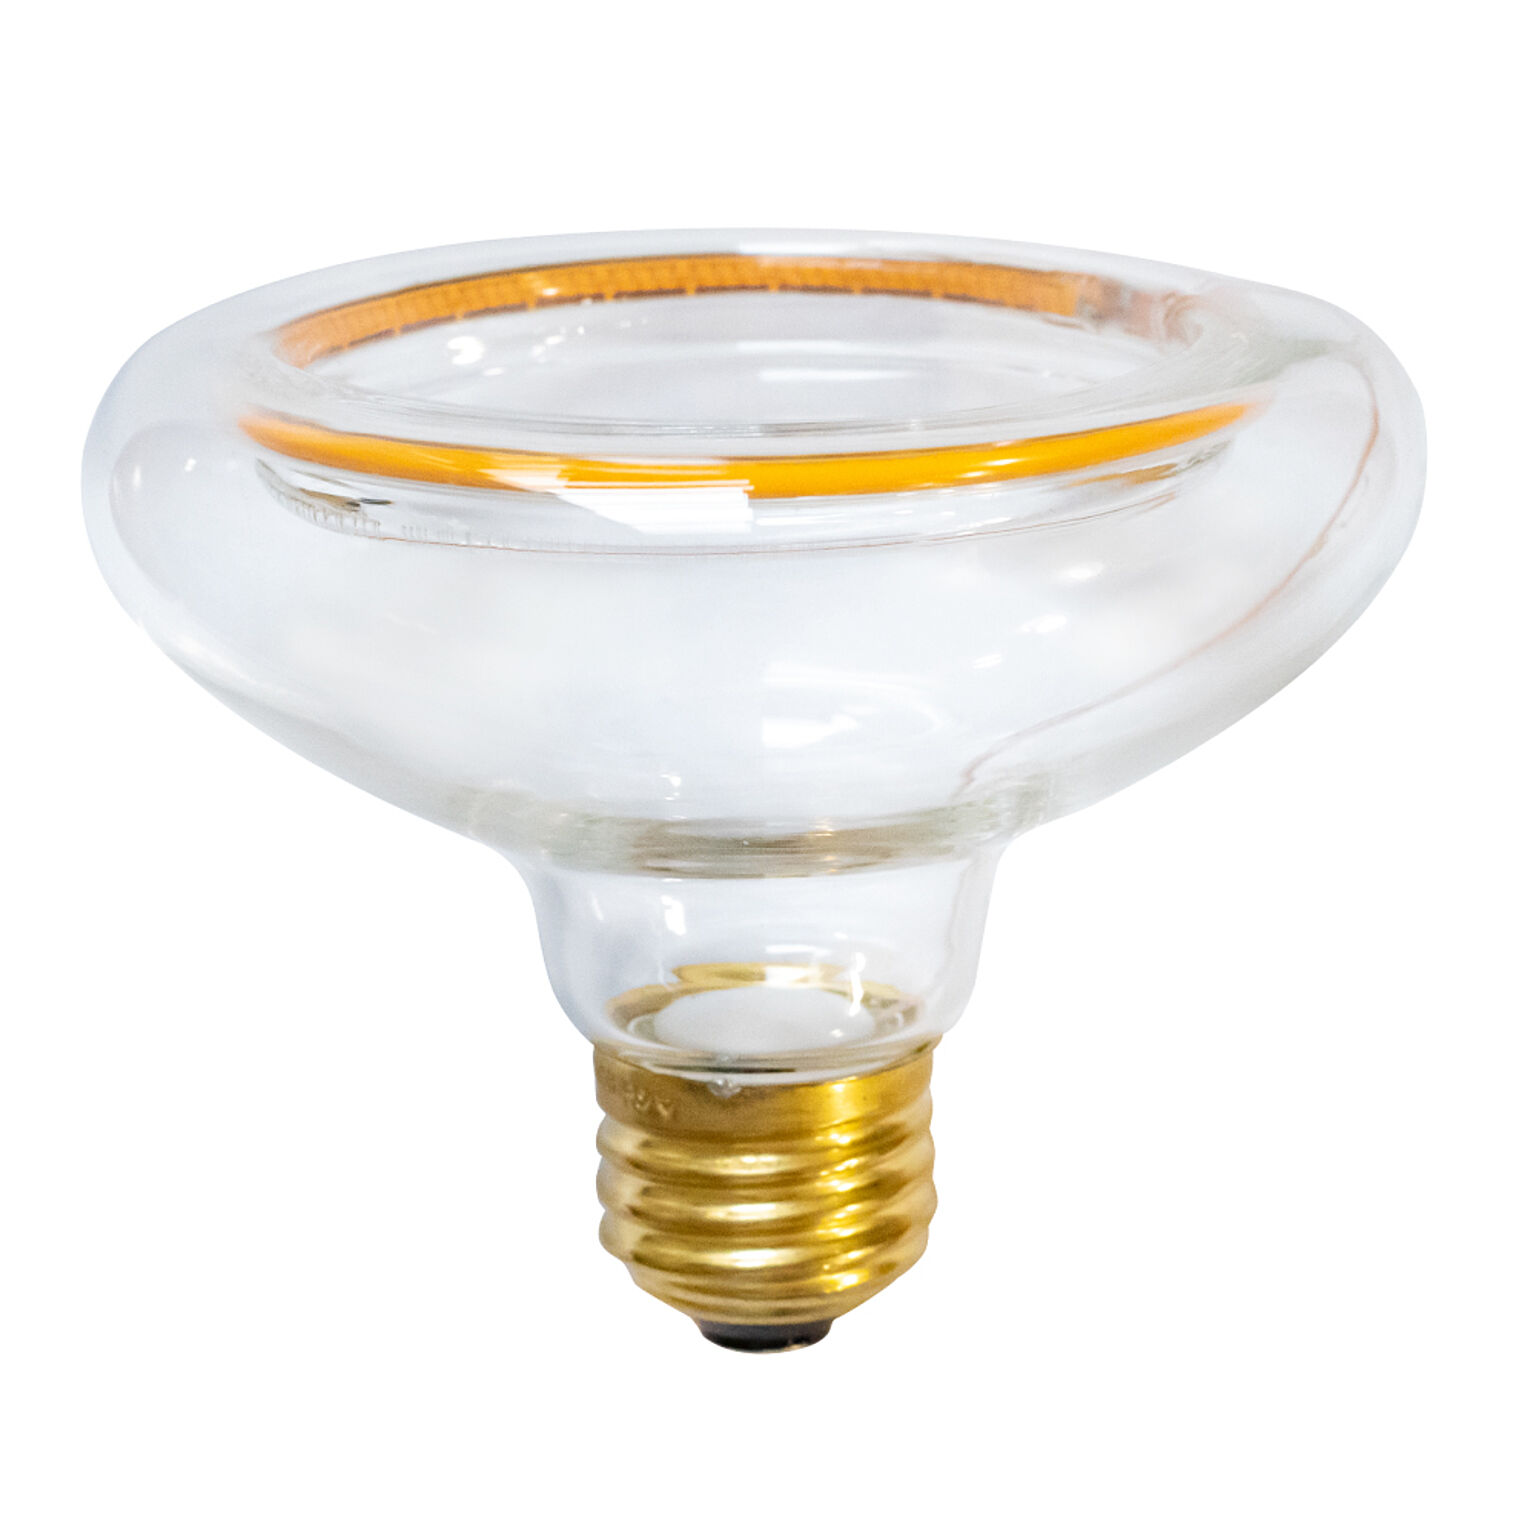 Ampoule LED電球 フィラメント E26 6W 300lm 1900K 電球色 電球 LED おしゃれ リビング ダイニング 玄関 レトロ アンティーク かわいい デザイン電球 1個